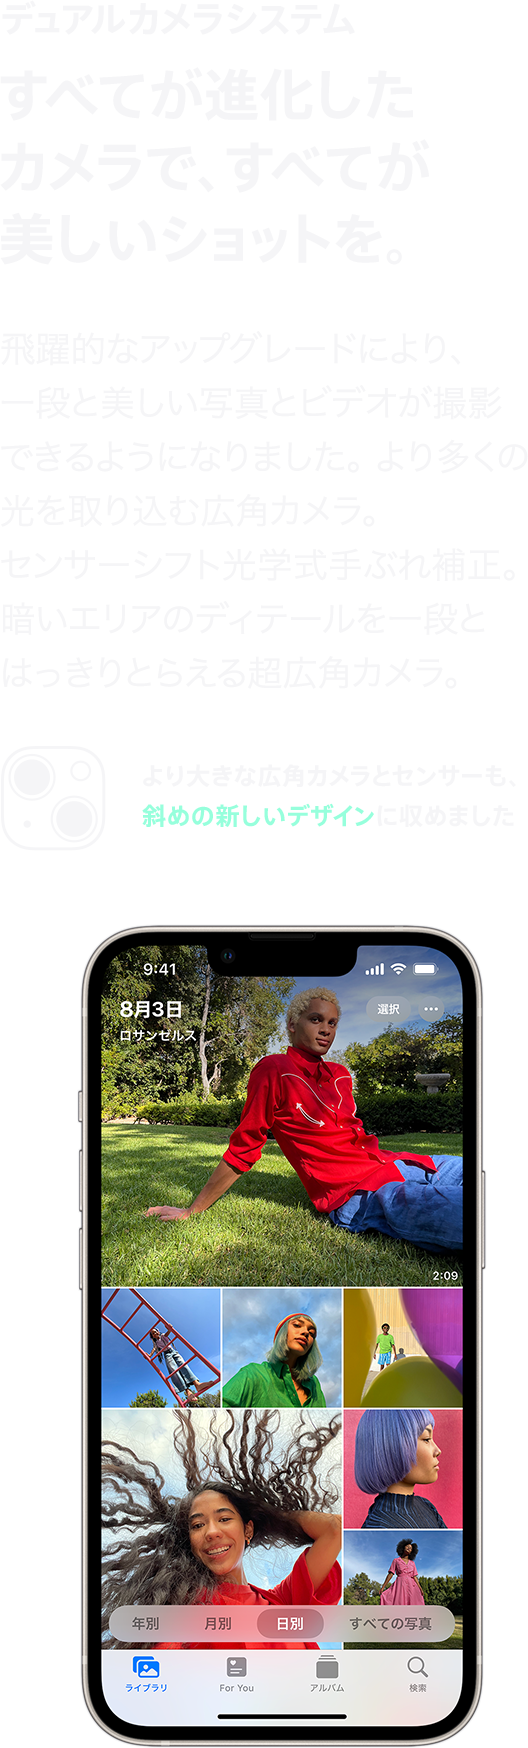 iphone13 デュアルカメラシステム